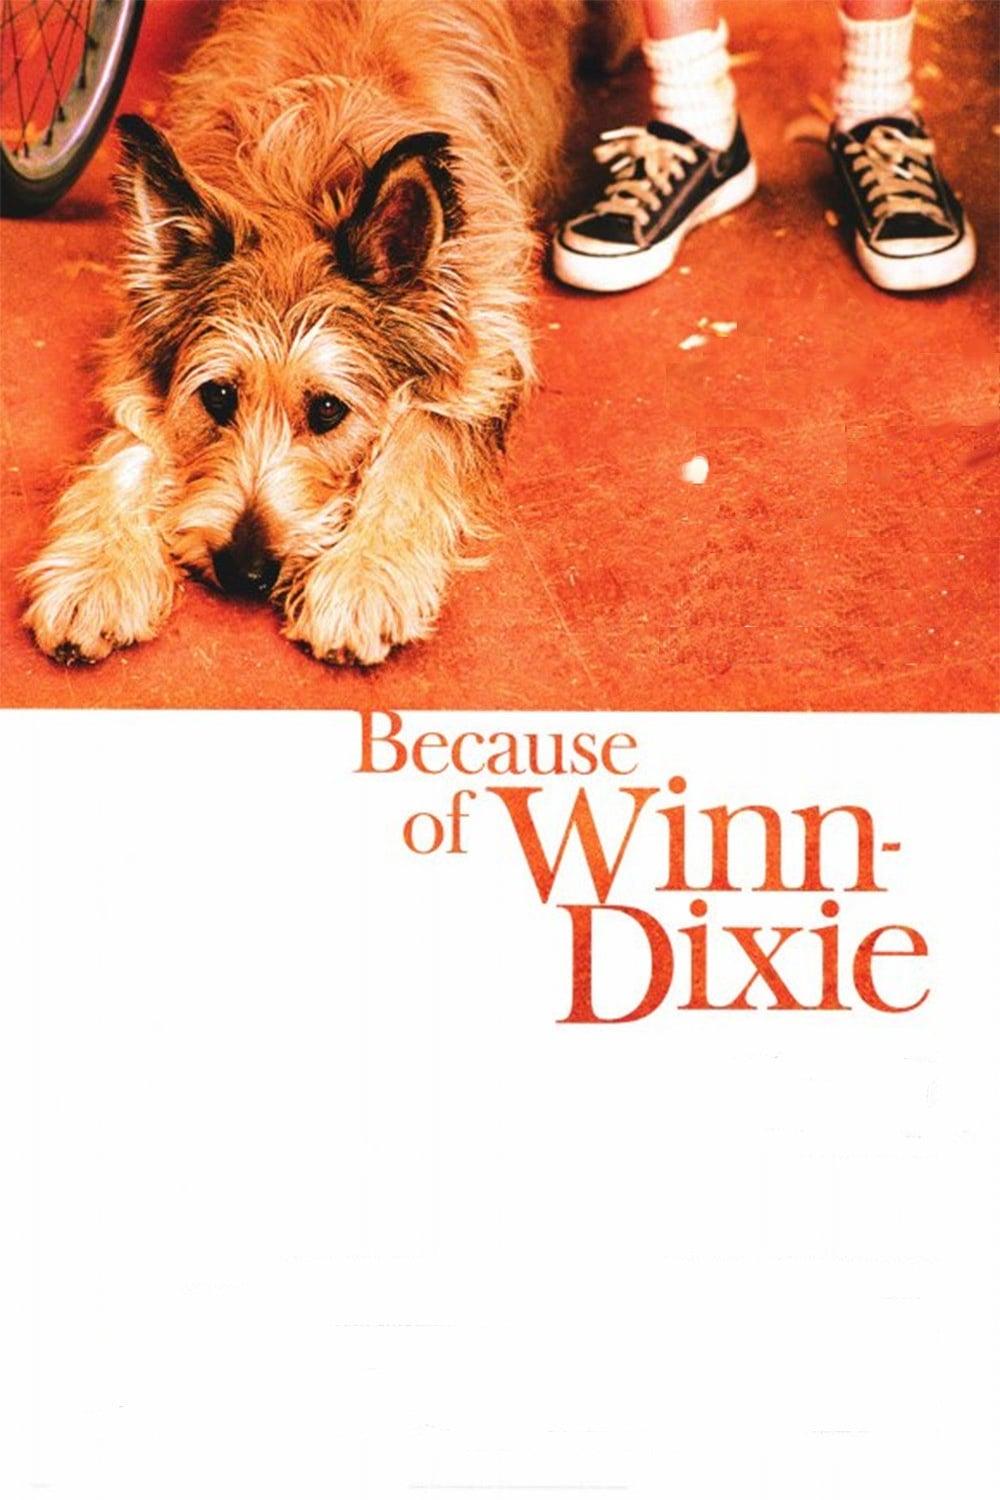 Because of Winn-Dixie poster